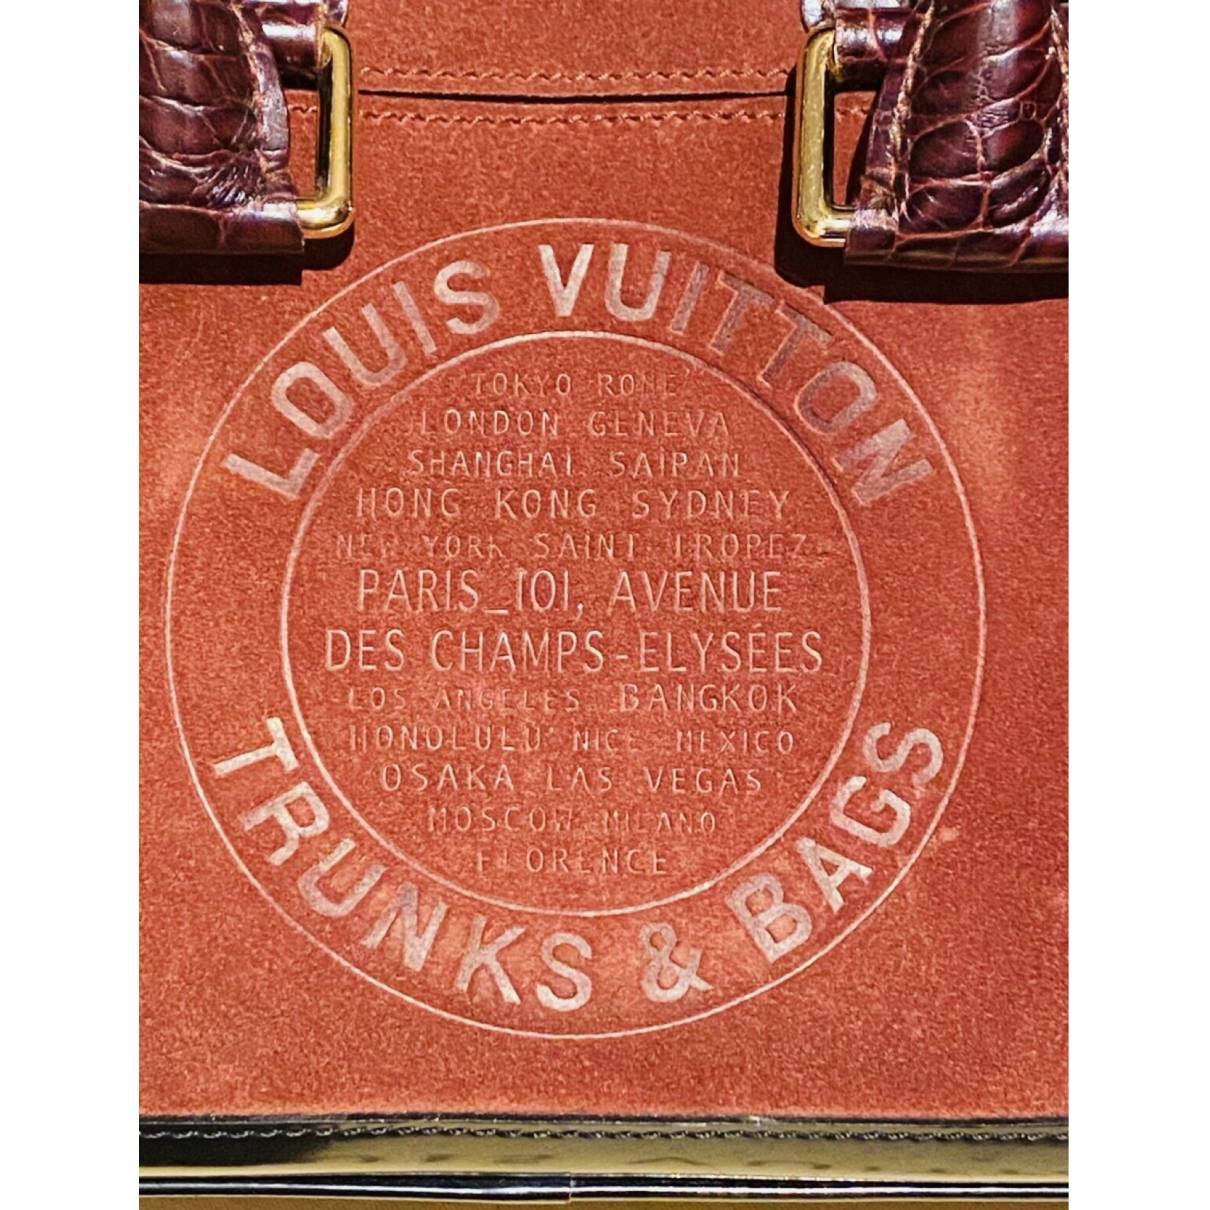 Louis Vuitton - Authenticated Speedy Handbag - Suede Burgundy for Women, Very Good Condition